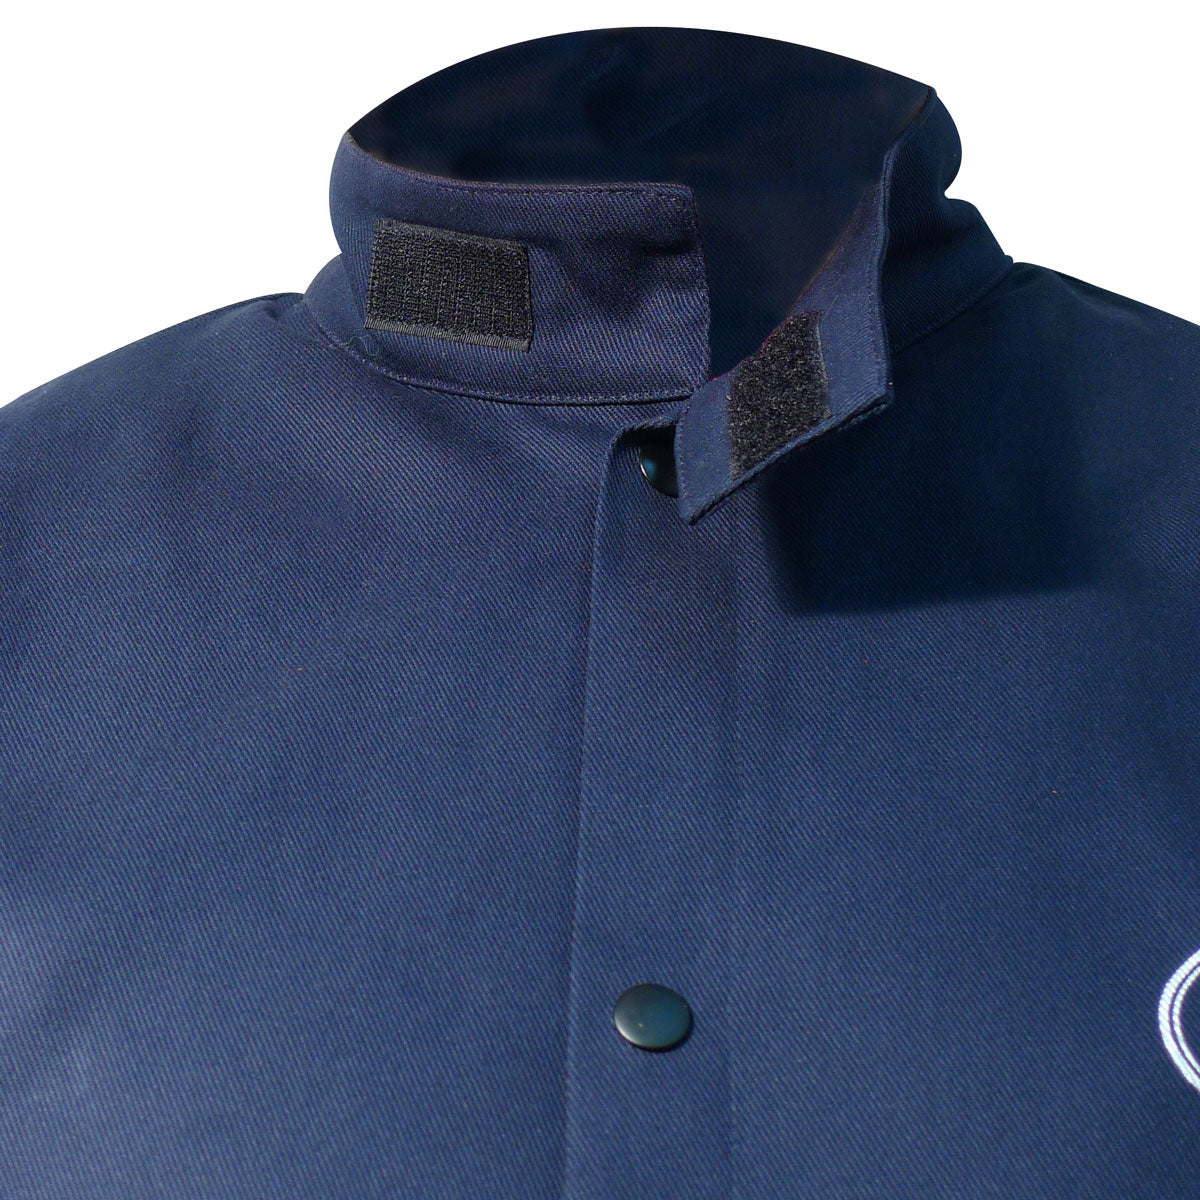 Caiman 3000-5 9oz FR Cotton Coat / Jacket